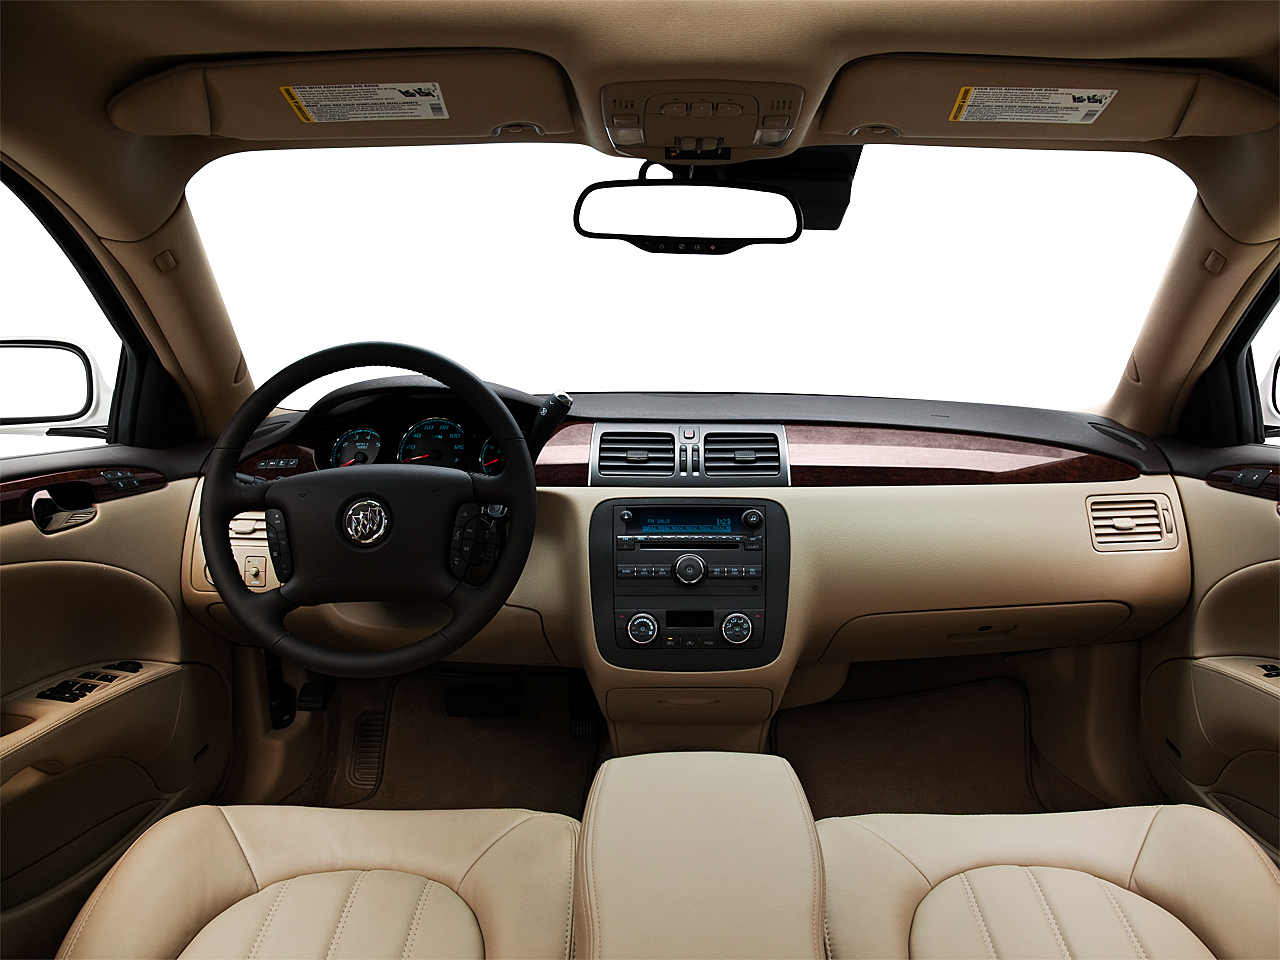 2011 Buick Lucerne Super 4dr Sedan - Research - GrooveCar